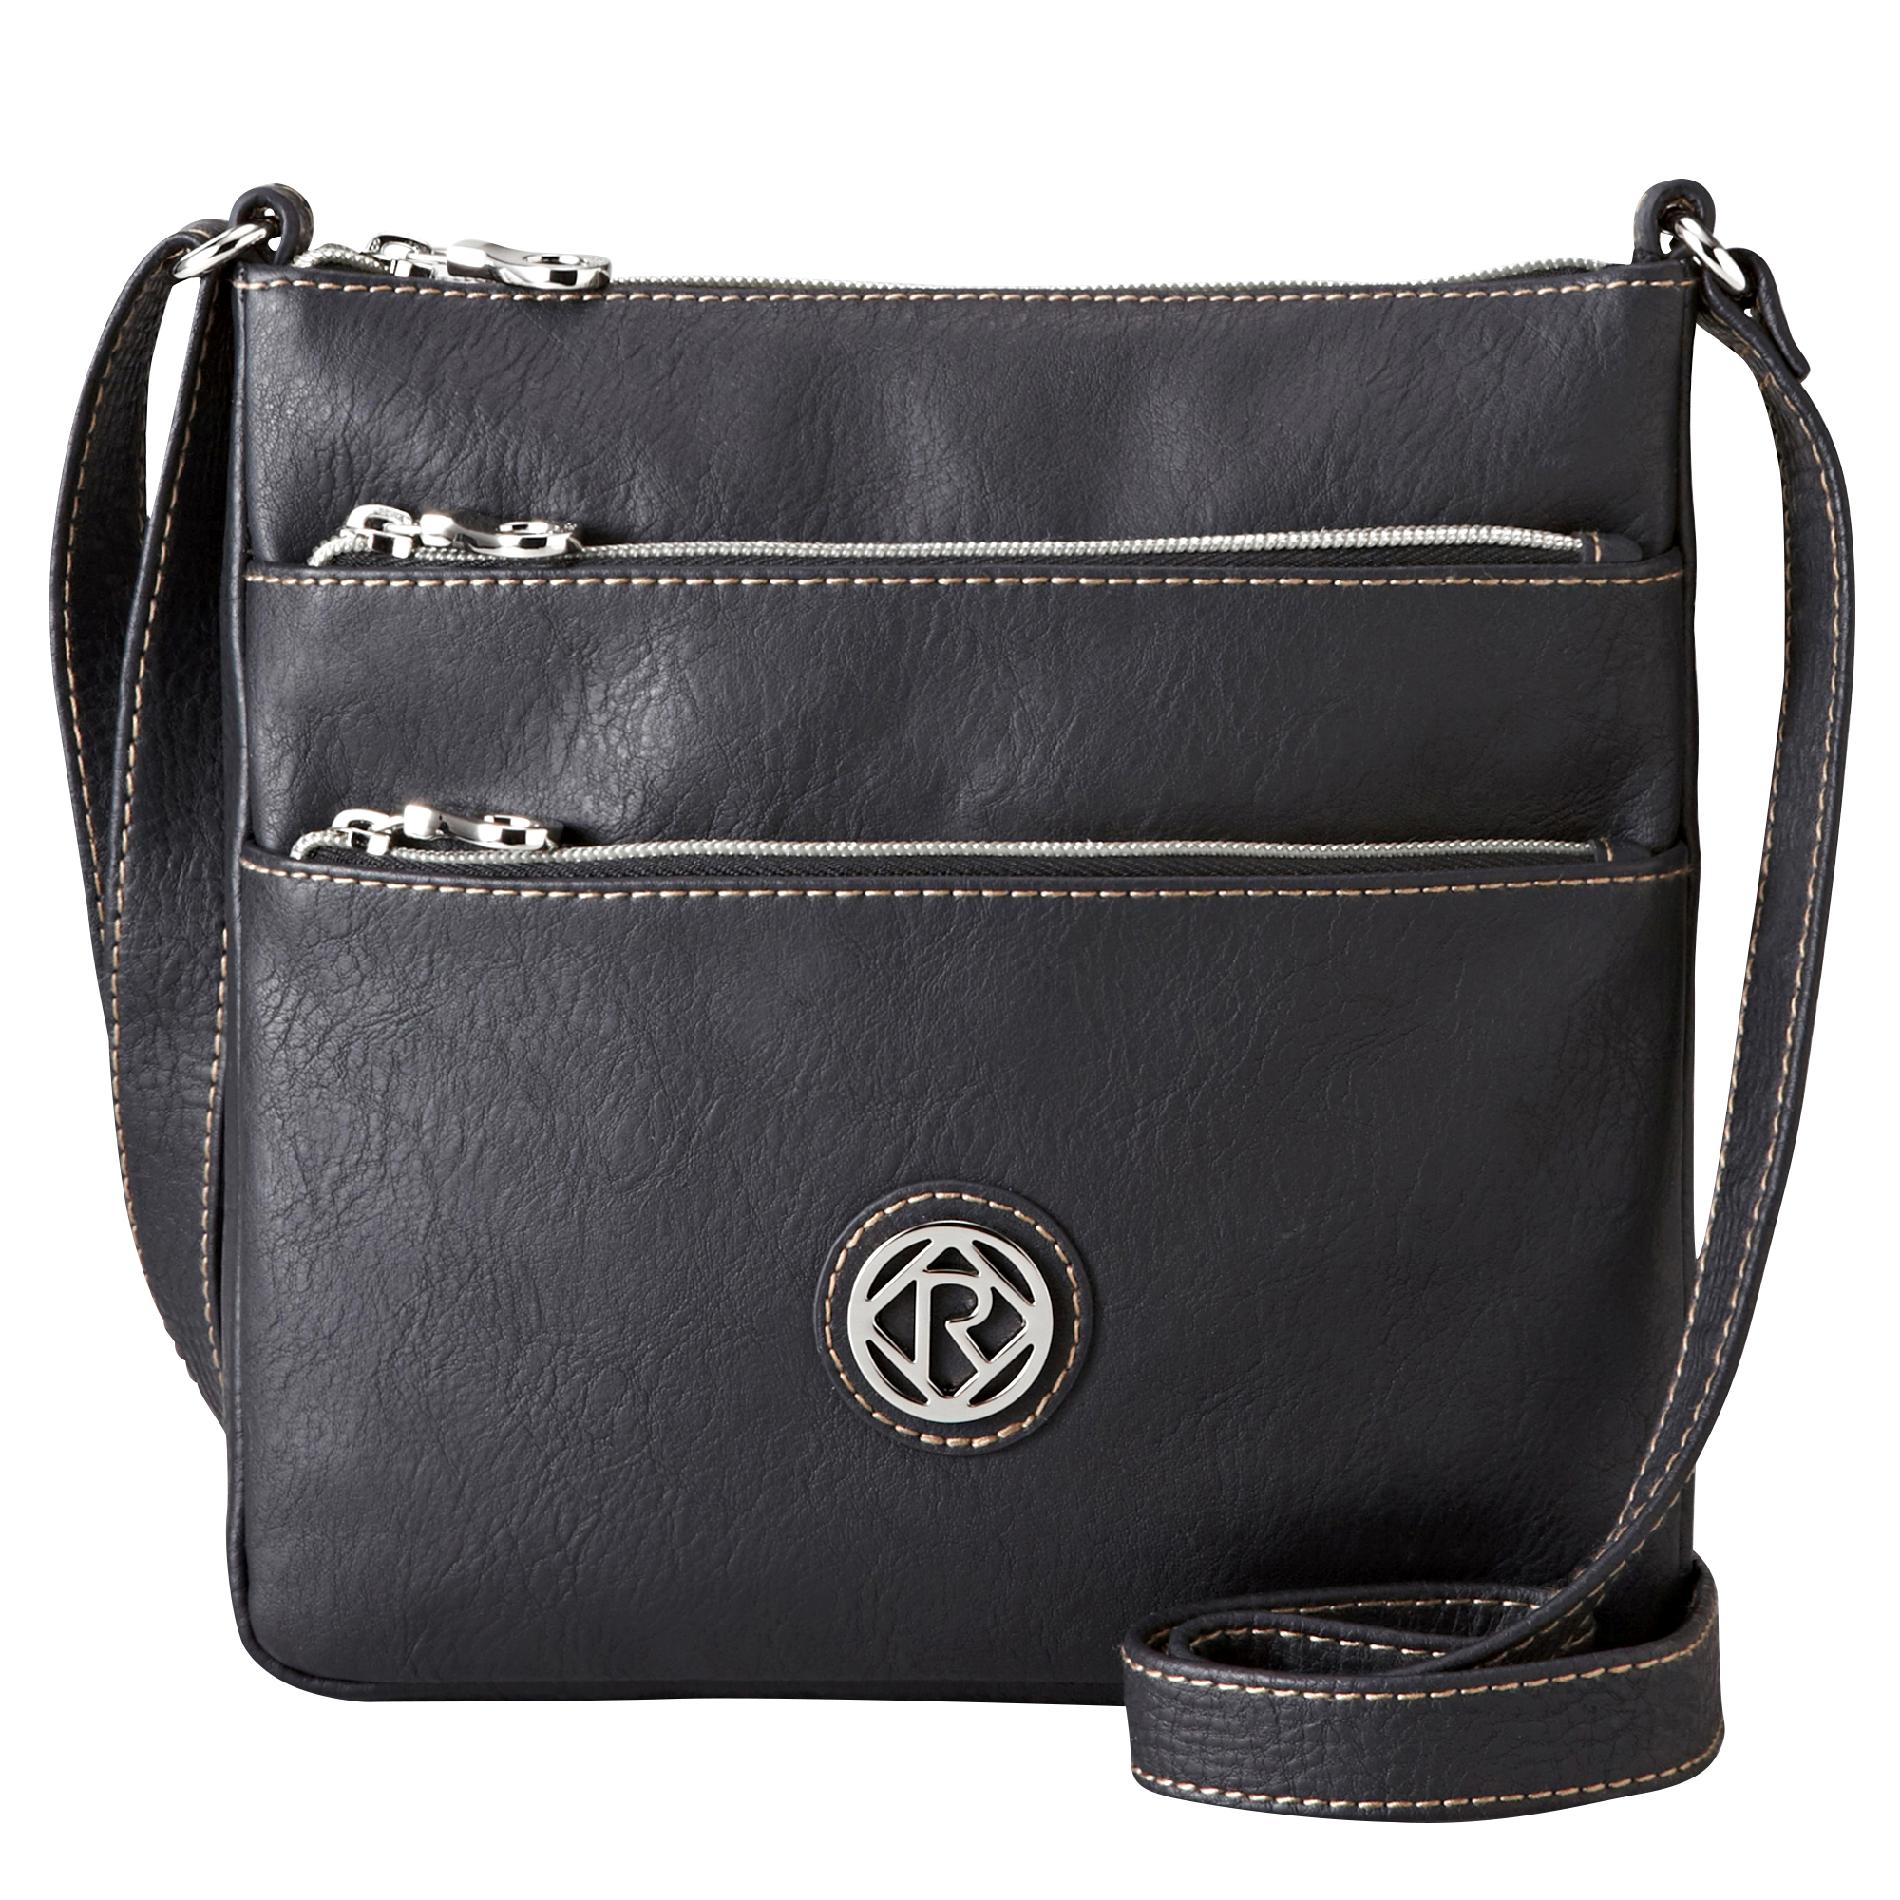 Relic Women's Erica Crossbody Handbag - Faux Leather